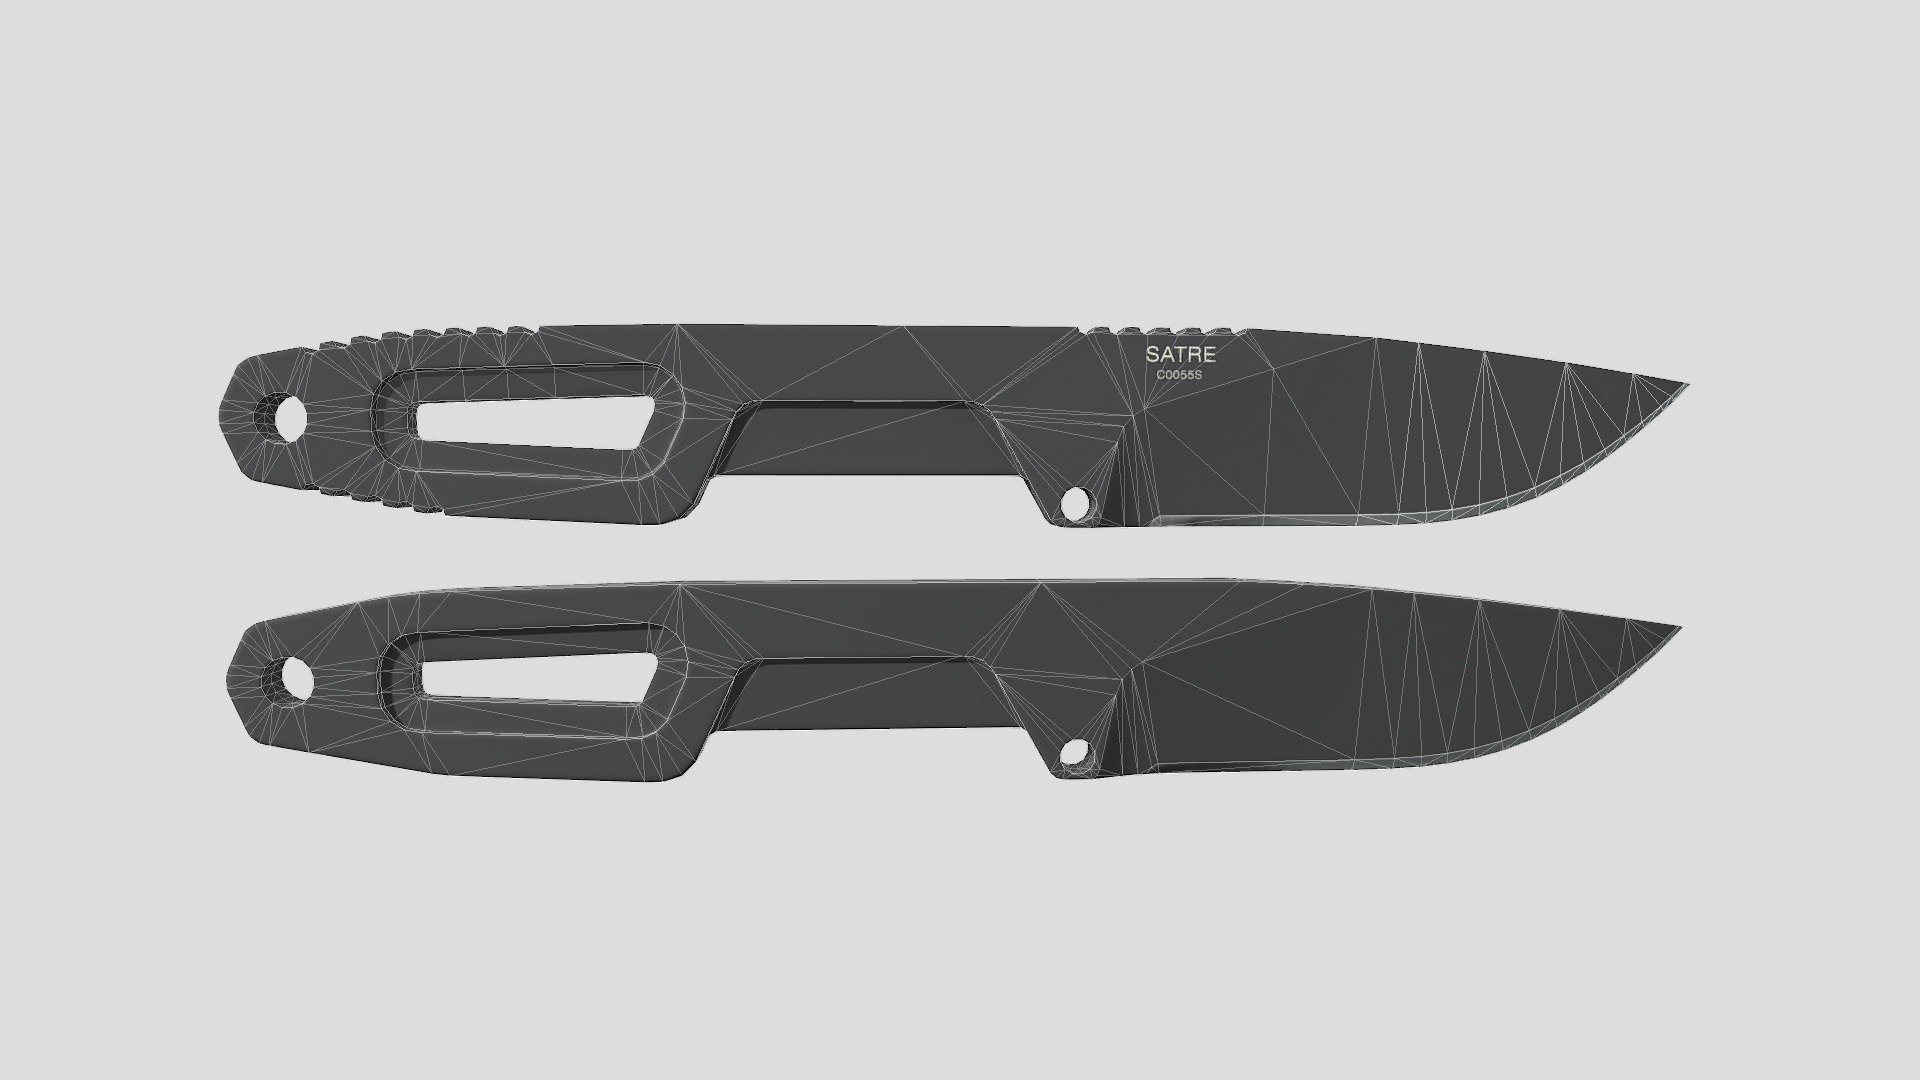 Game-ready low poly knife model by extrema ratio - Knife / Satre black - 3D model by sakurashi 3d model